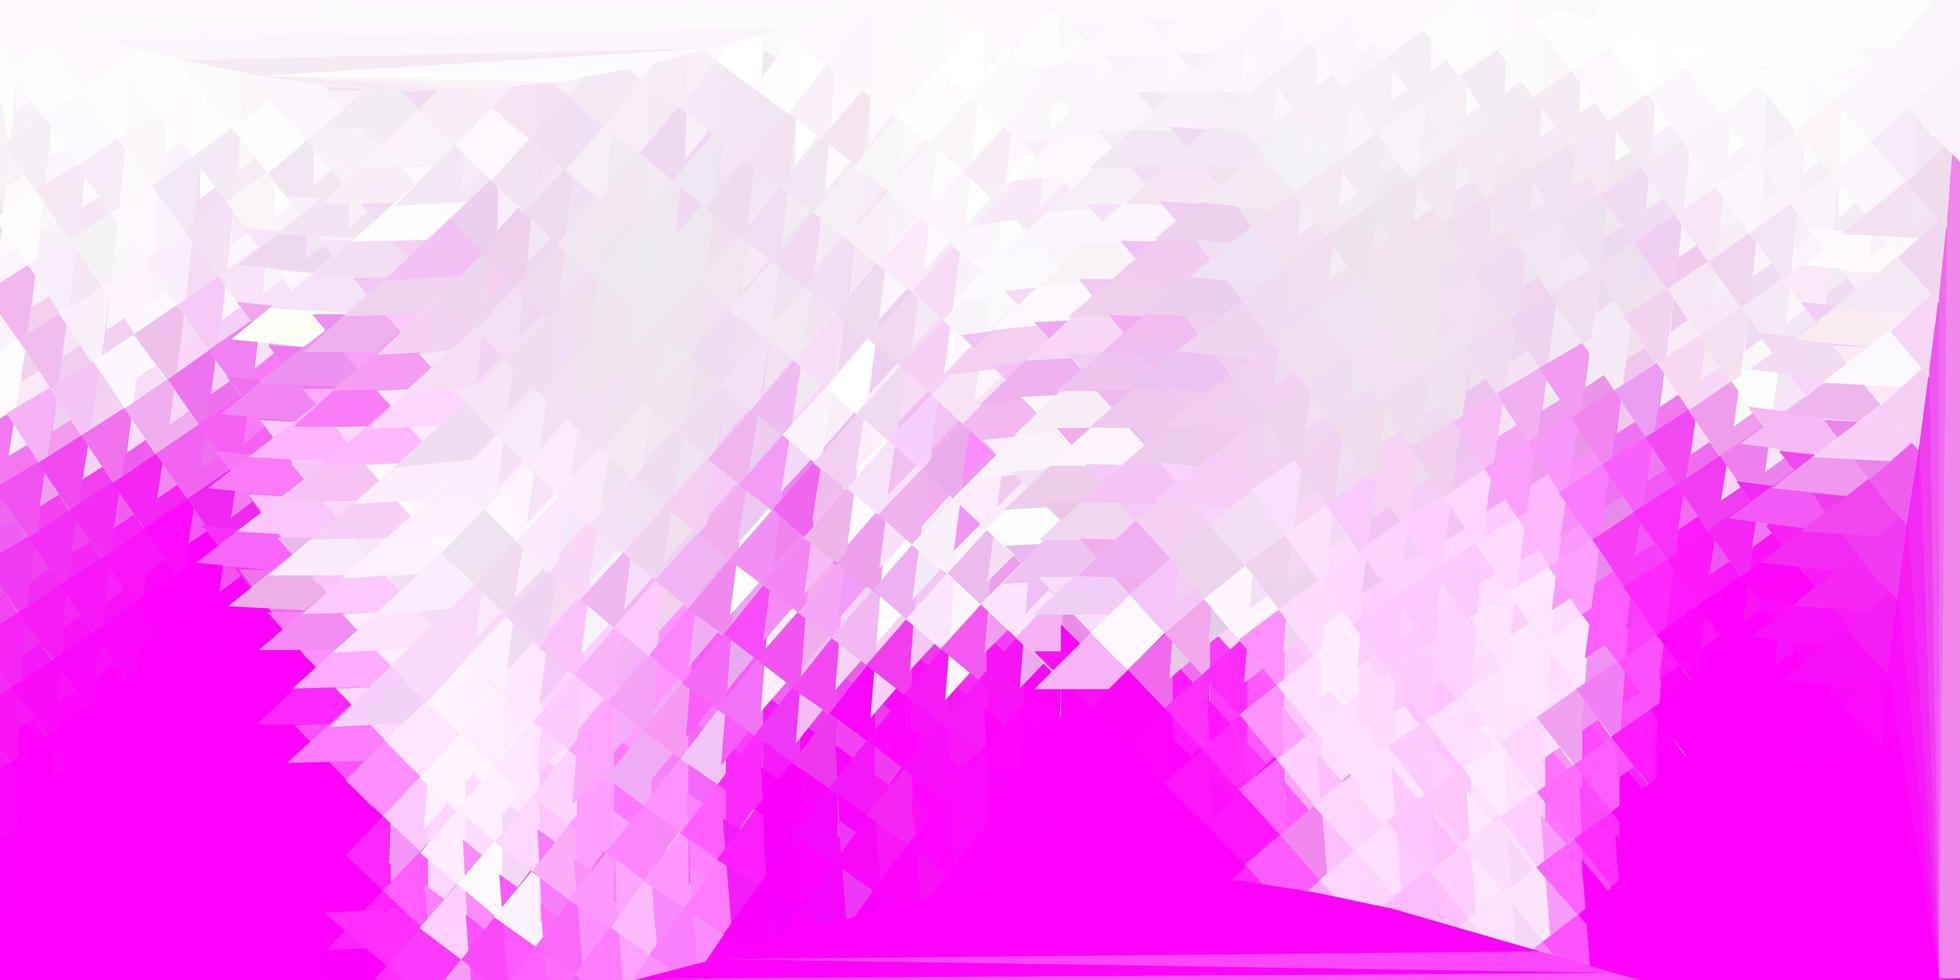 layout de triângulo poli de vetor rosa claro.